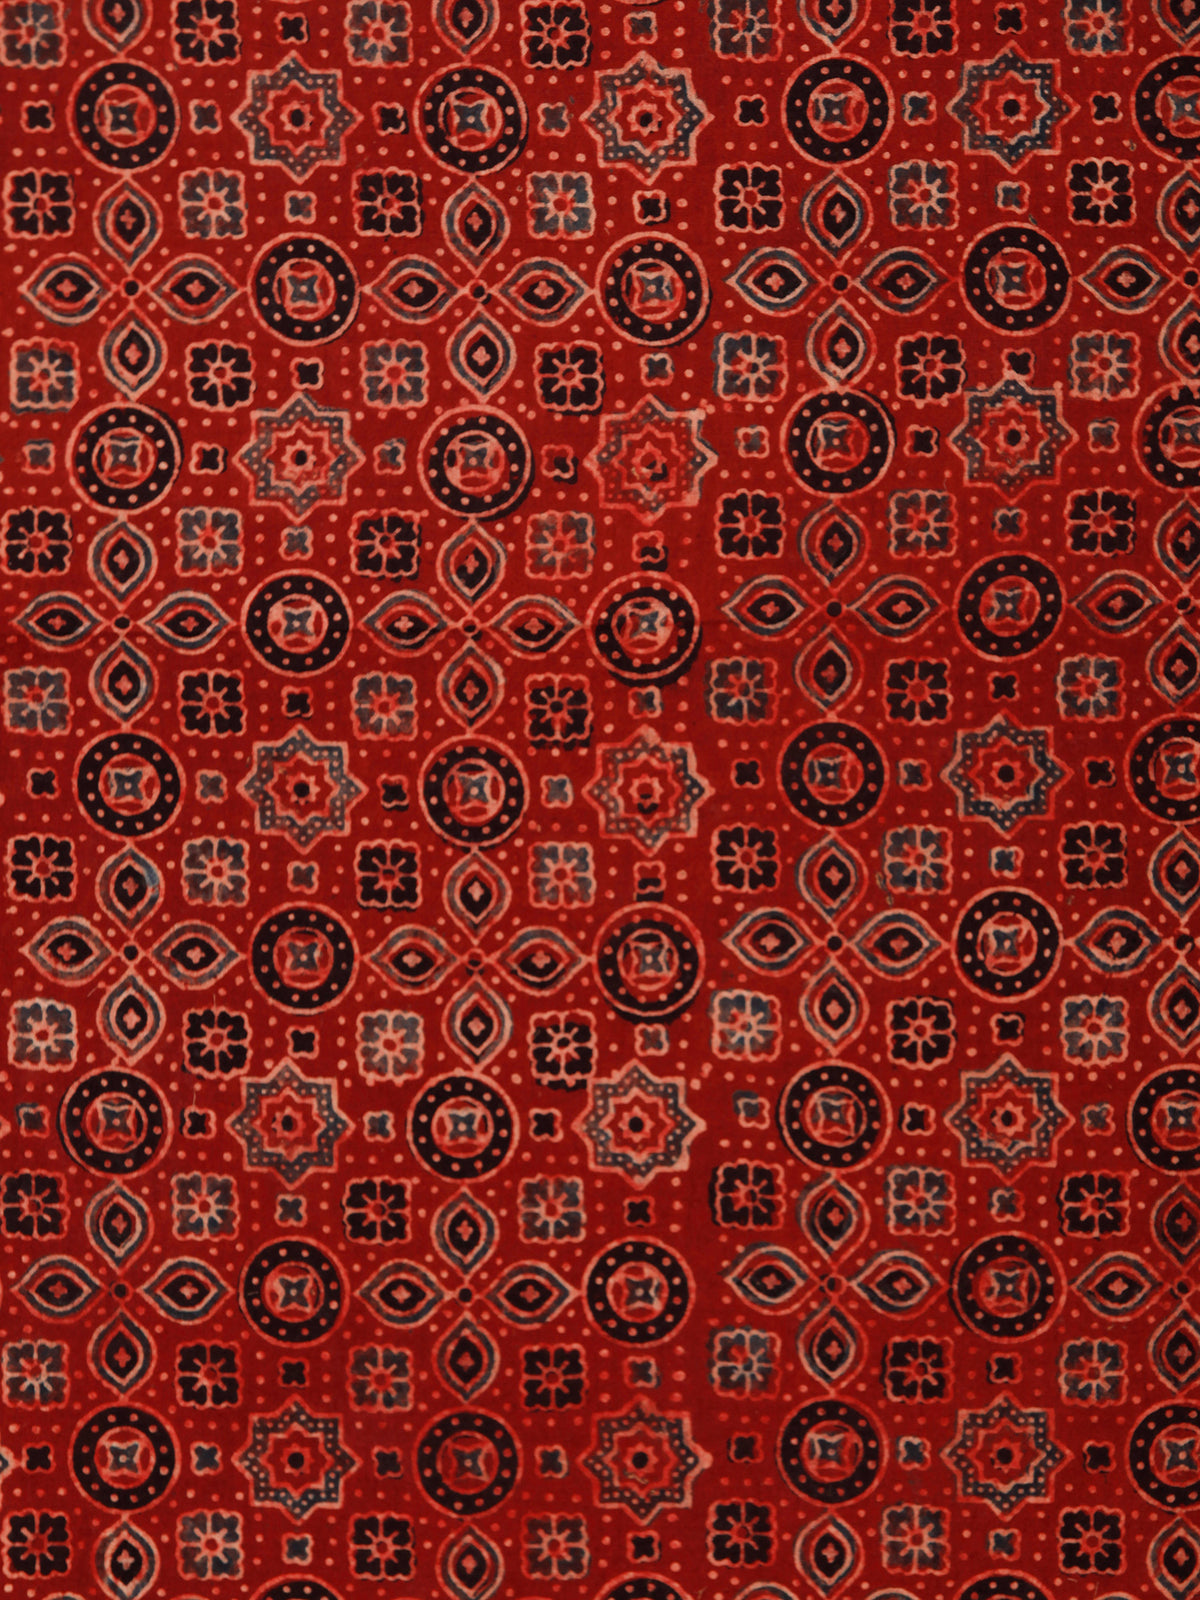 Red Black Maroon Blue Ajrakh Hand Block Printed Cotton Fabric Per Meter - F003F1786